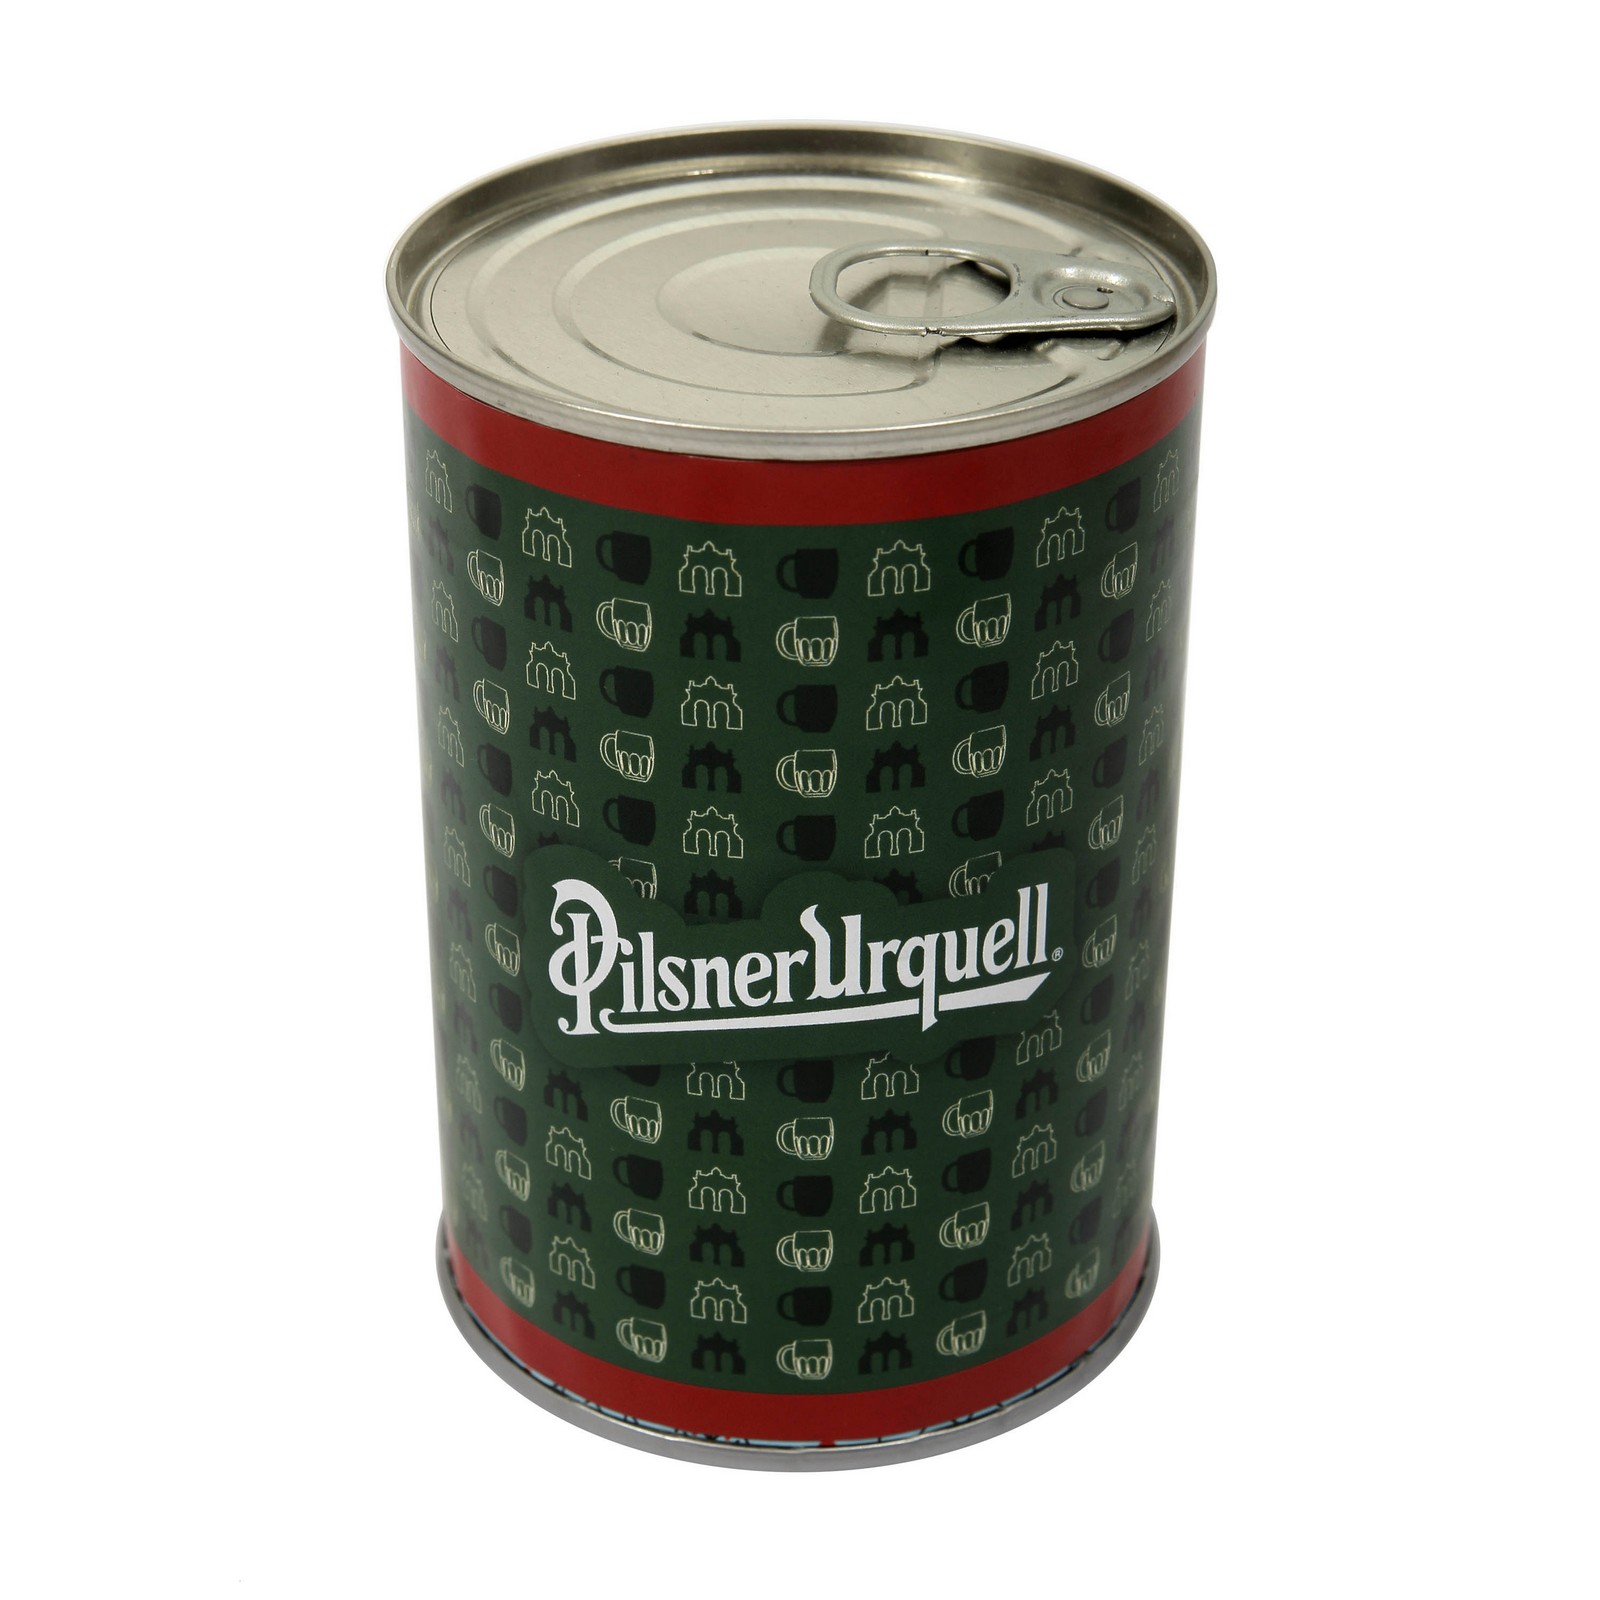 Pilsner Urquell Gate and Beer Mug Fusakle Socks in a can